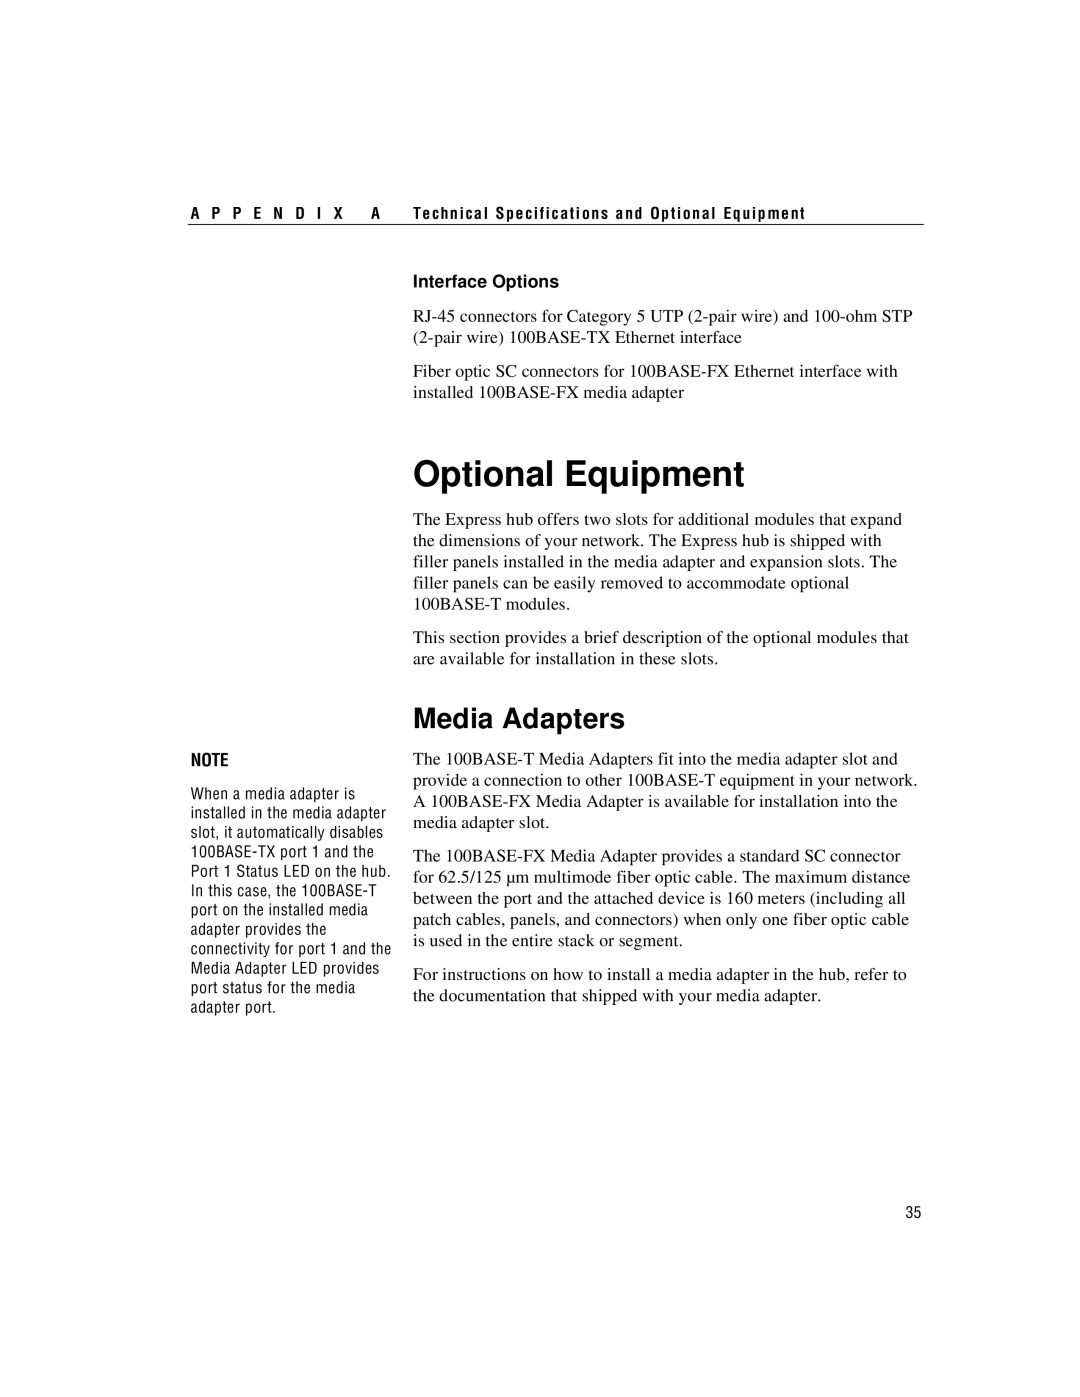 Intel 100BASE-TX manual Optional Equipment, Media Adapters 